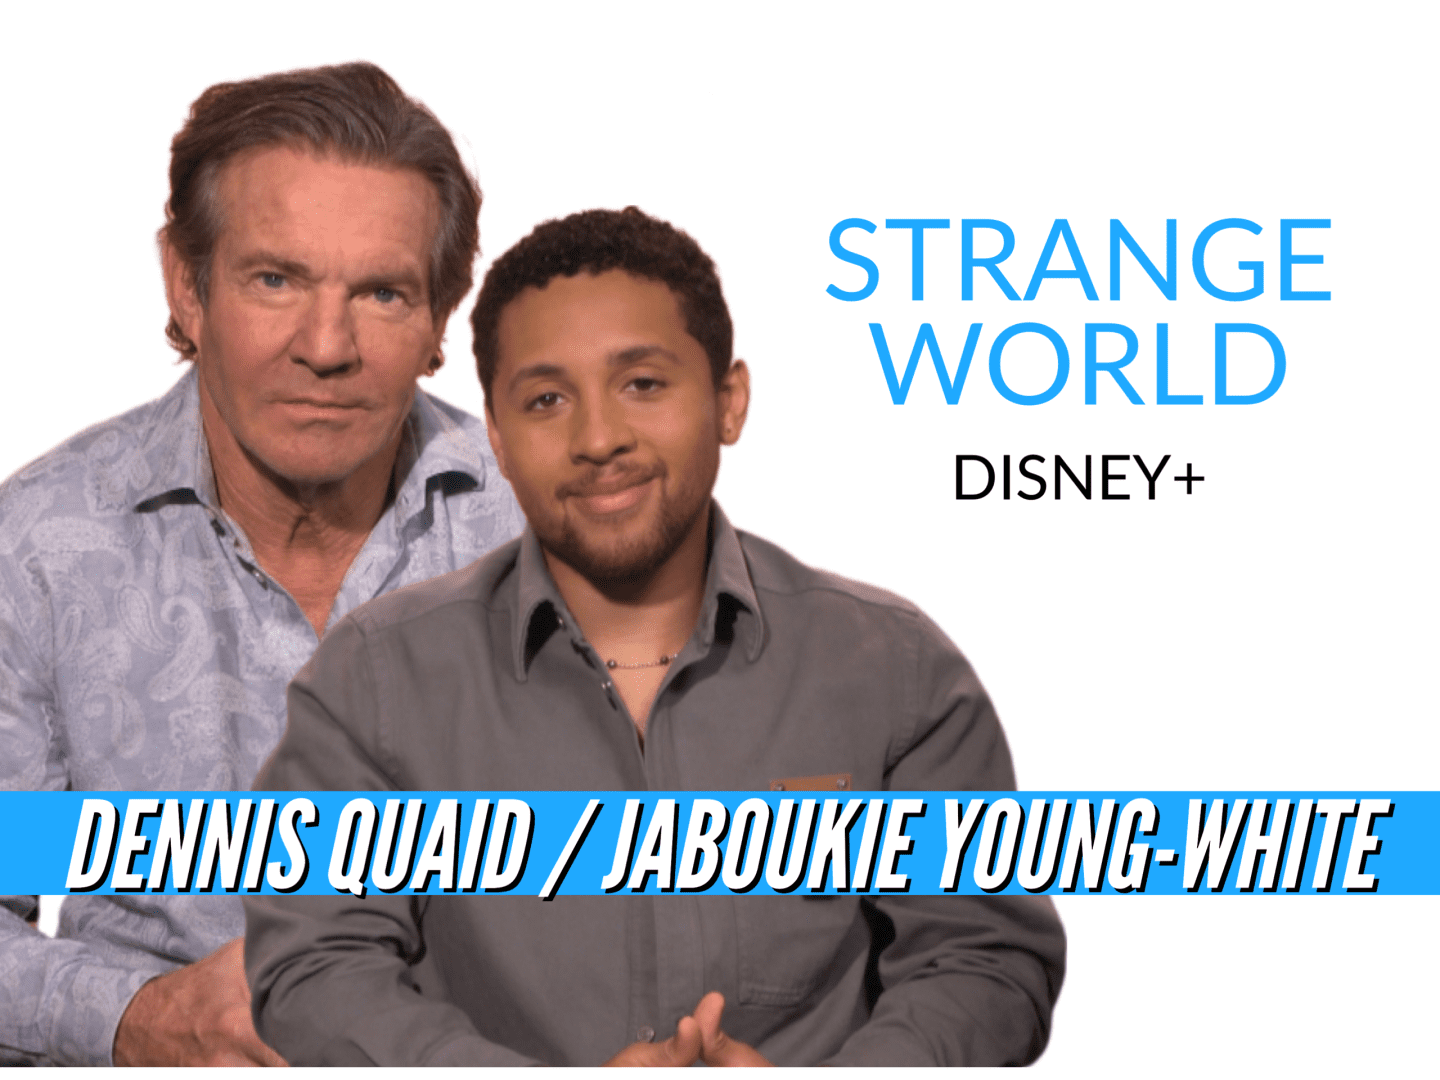 Dennis Quaid and Jaboukie Young-White star in Disney's 'Strange World'